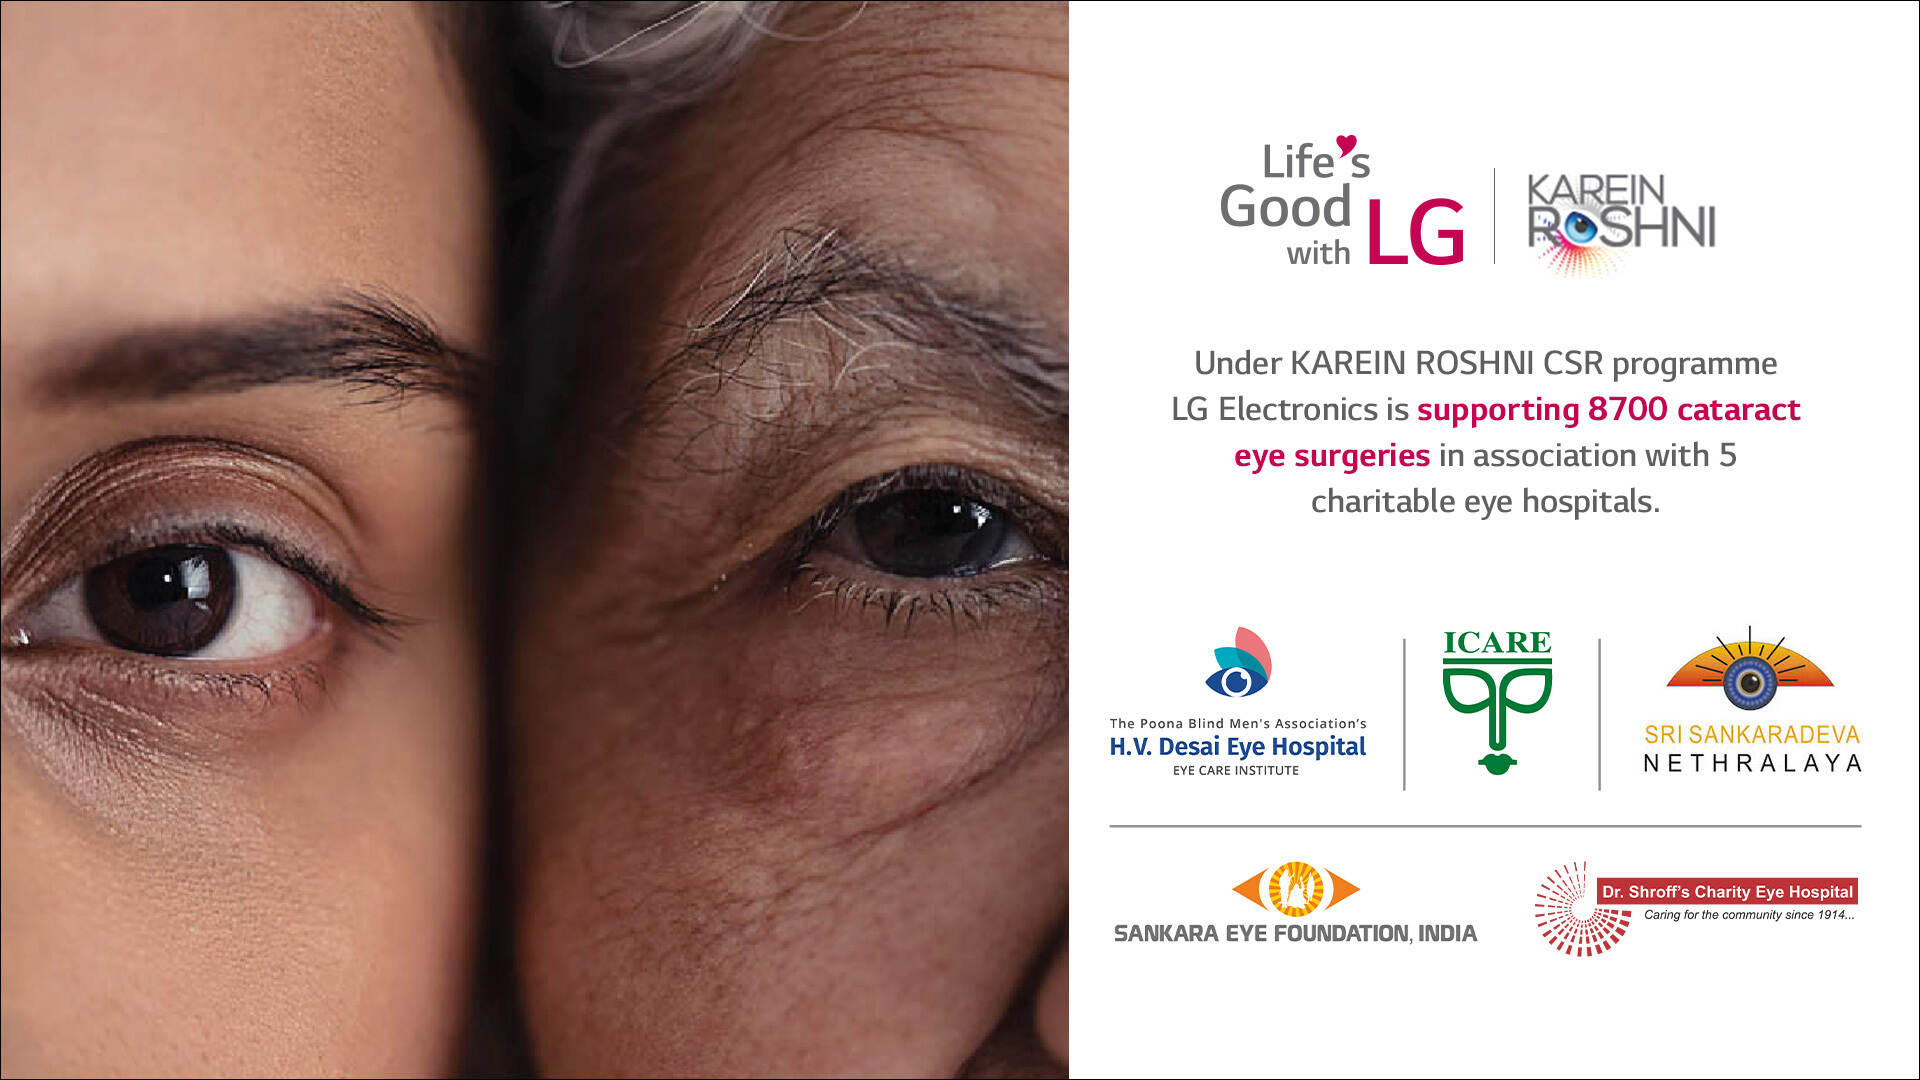 Di bawah program tersebut, LG Electronics mendukung 8.700 operasi mata katarak bagi penyandang tunanetra.